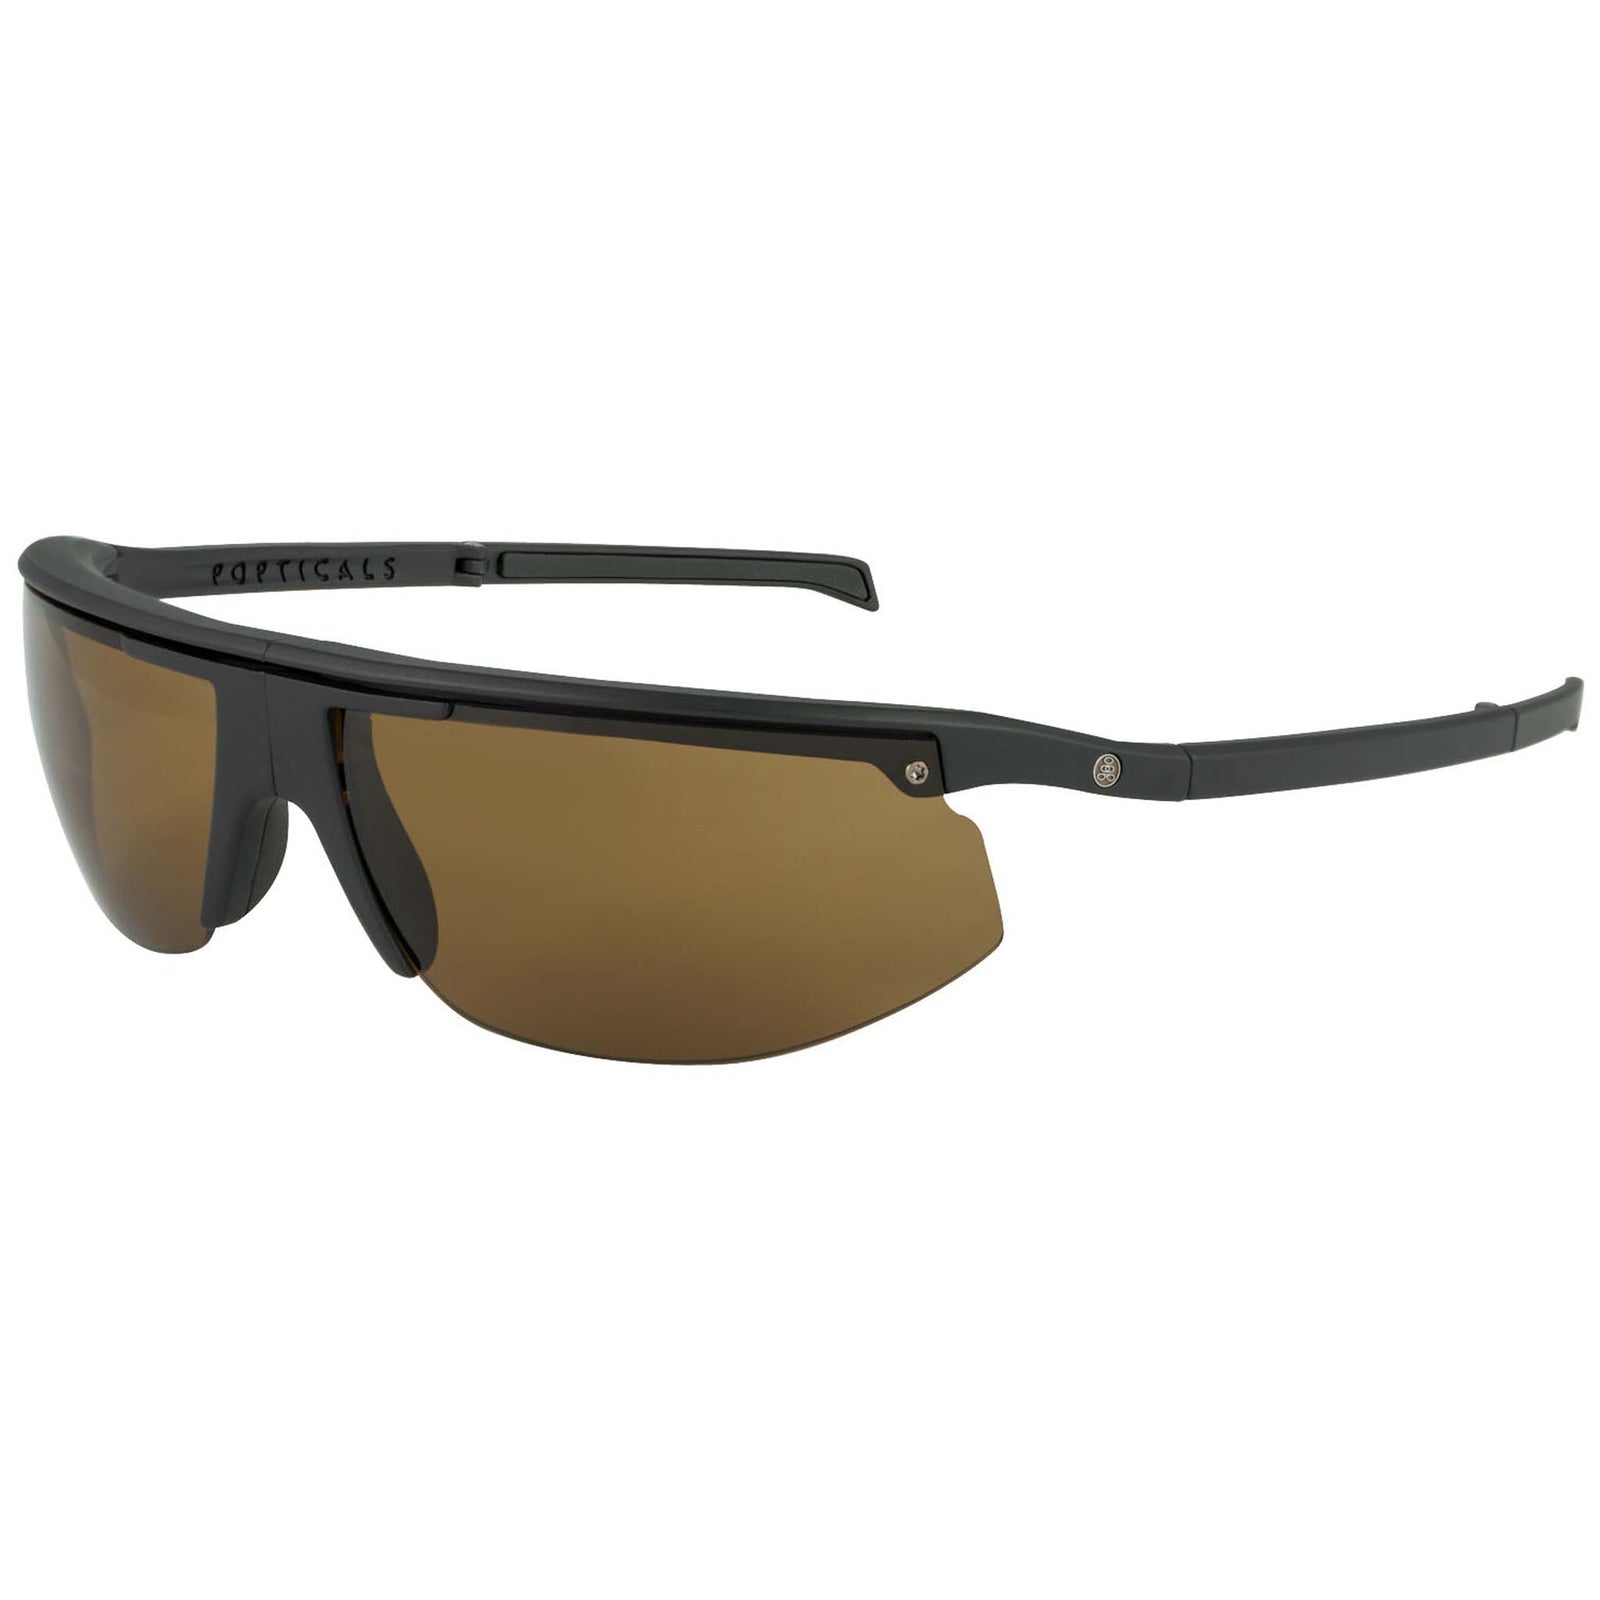 Popticals, Premium Compact Sunglasses, PopStar, 010040-BMNP, Polarized Sunglasses, Matte Black Frame, Brown Lenses, Glam View